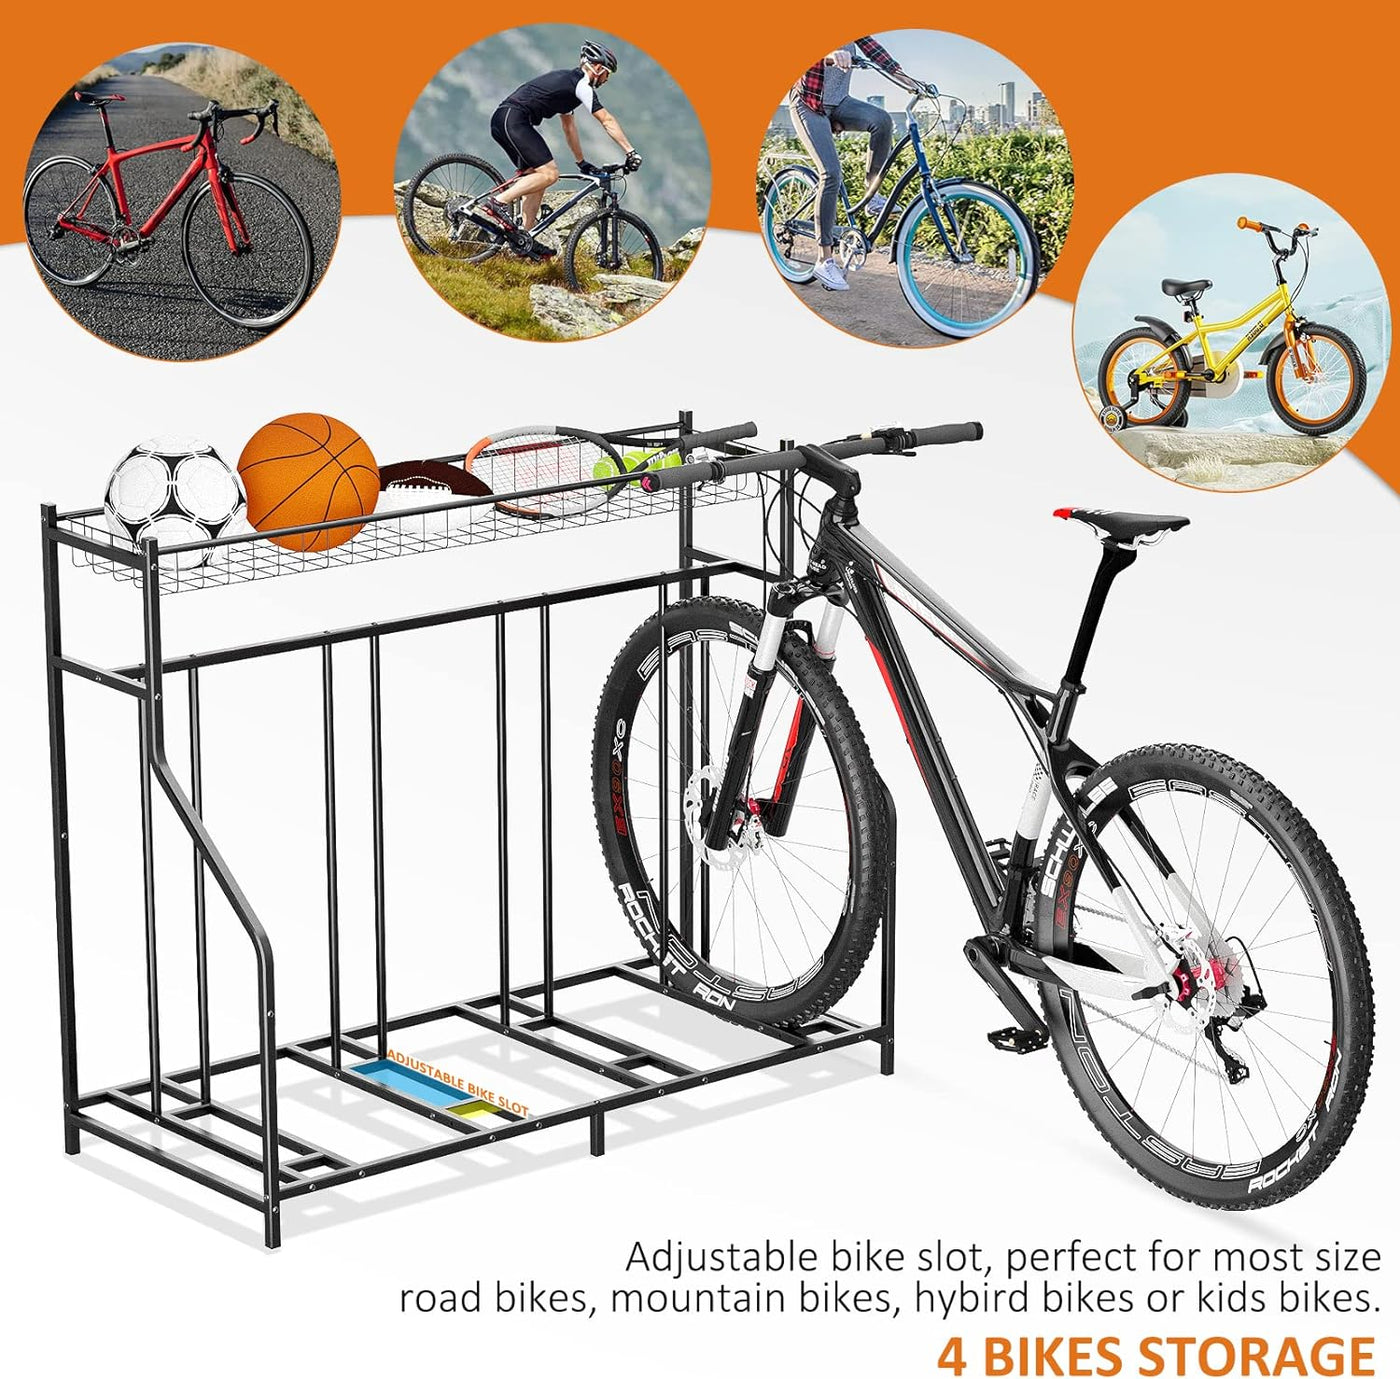 Gadroad 4 Bike Rack Garage with Storage Basket for Mountain/Kids Bike, Black - $60